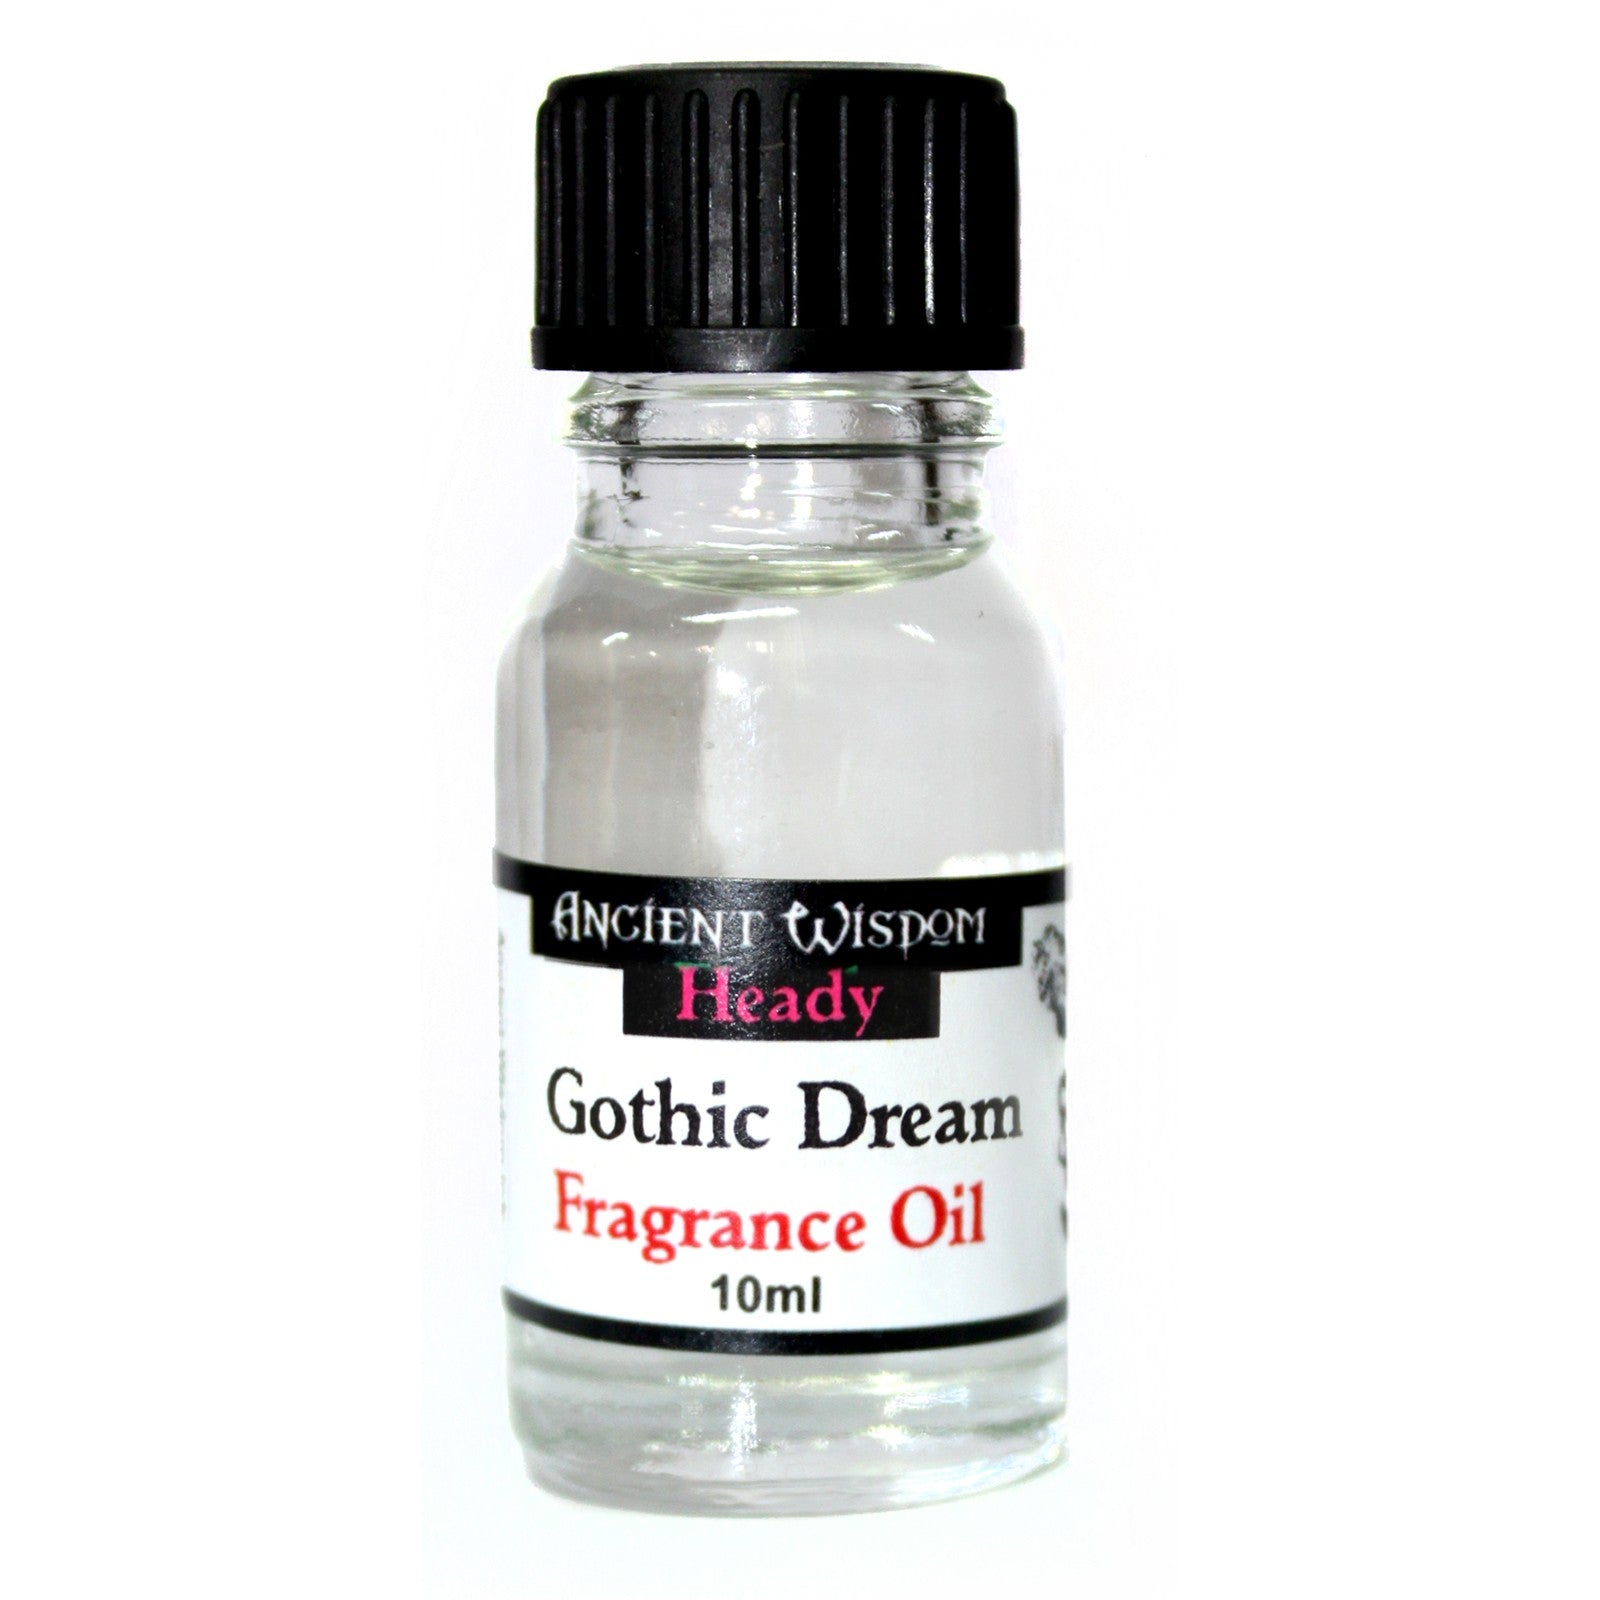 View 10ml Gothic Dream Fragrance Oil information